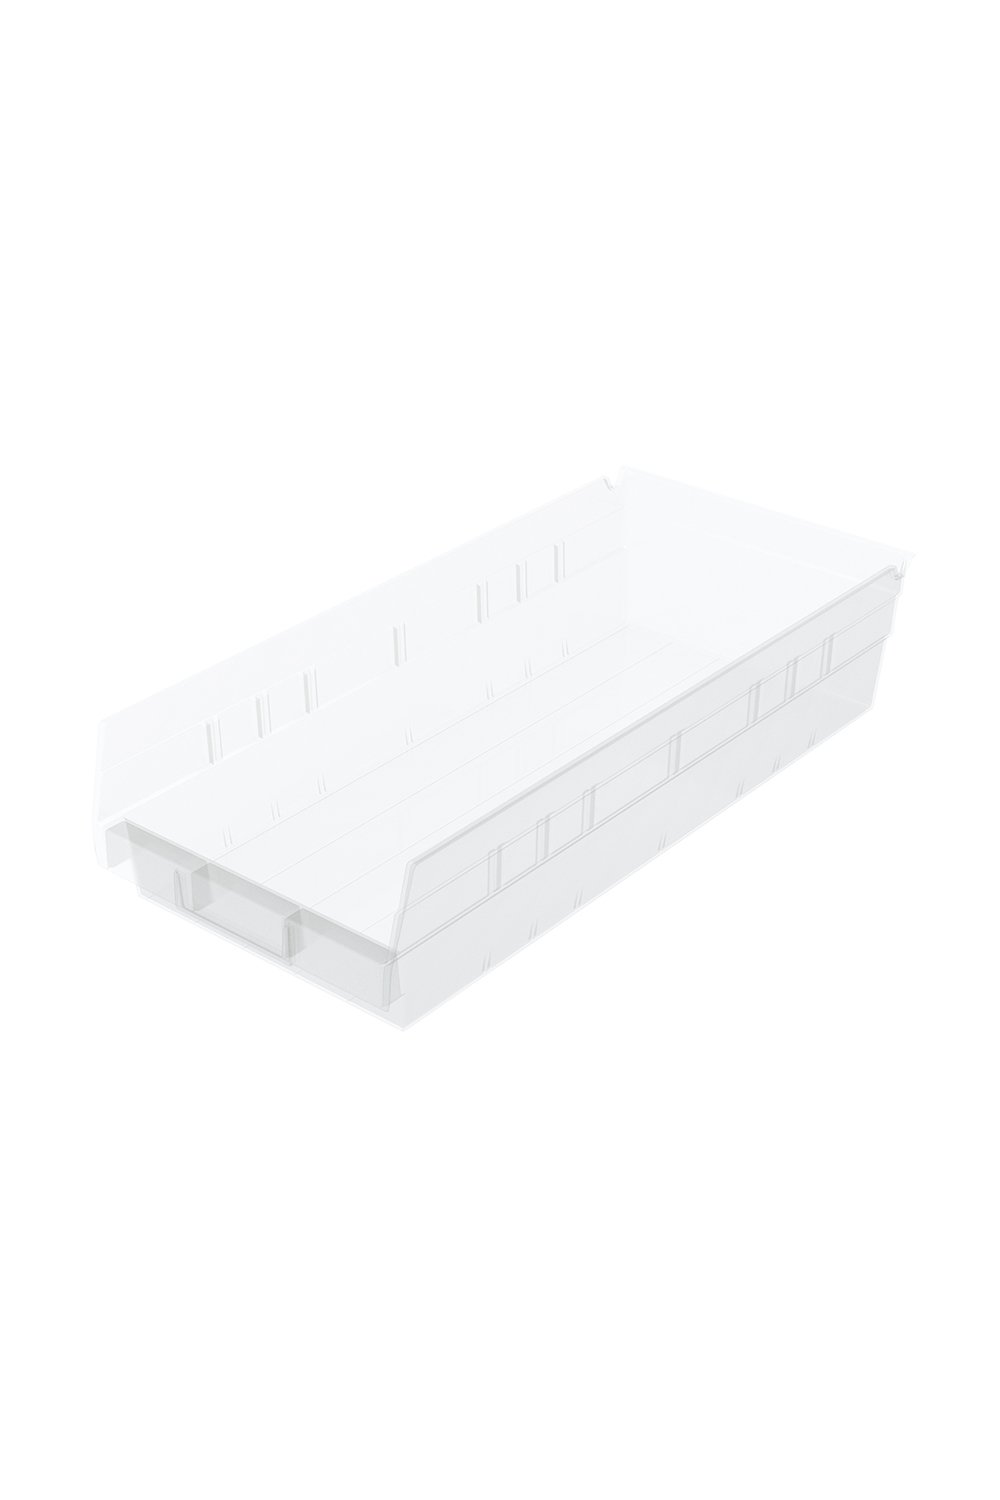 Shelf Bin for 18"D Shelves Bins & Containers Acart 17-7/8'' x 8-3/8'' x 4'' Clear 